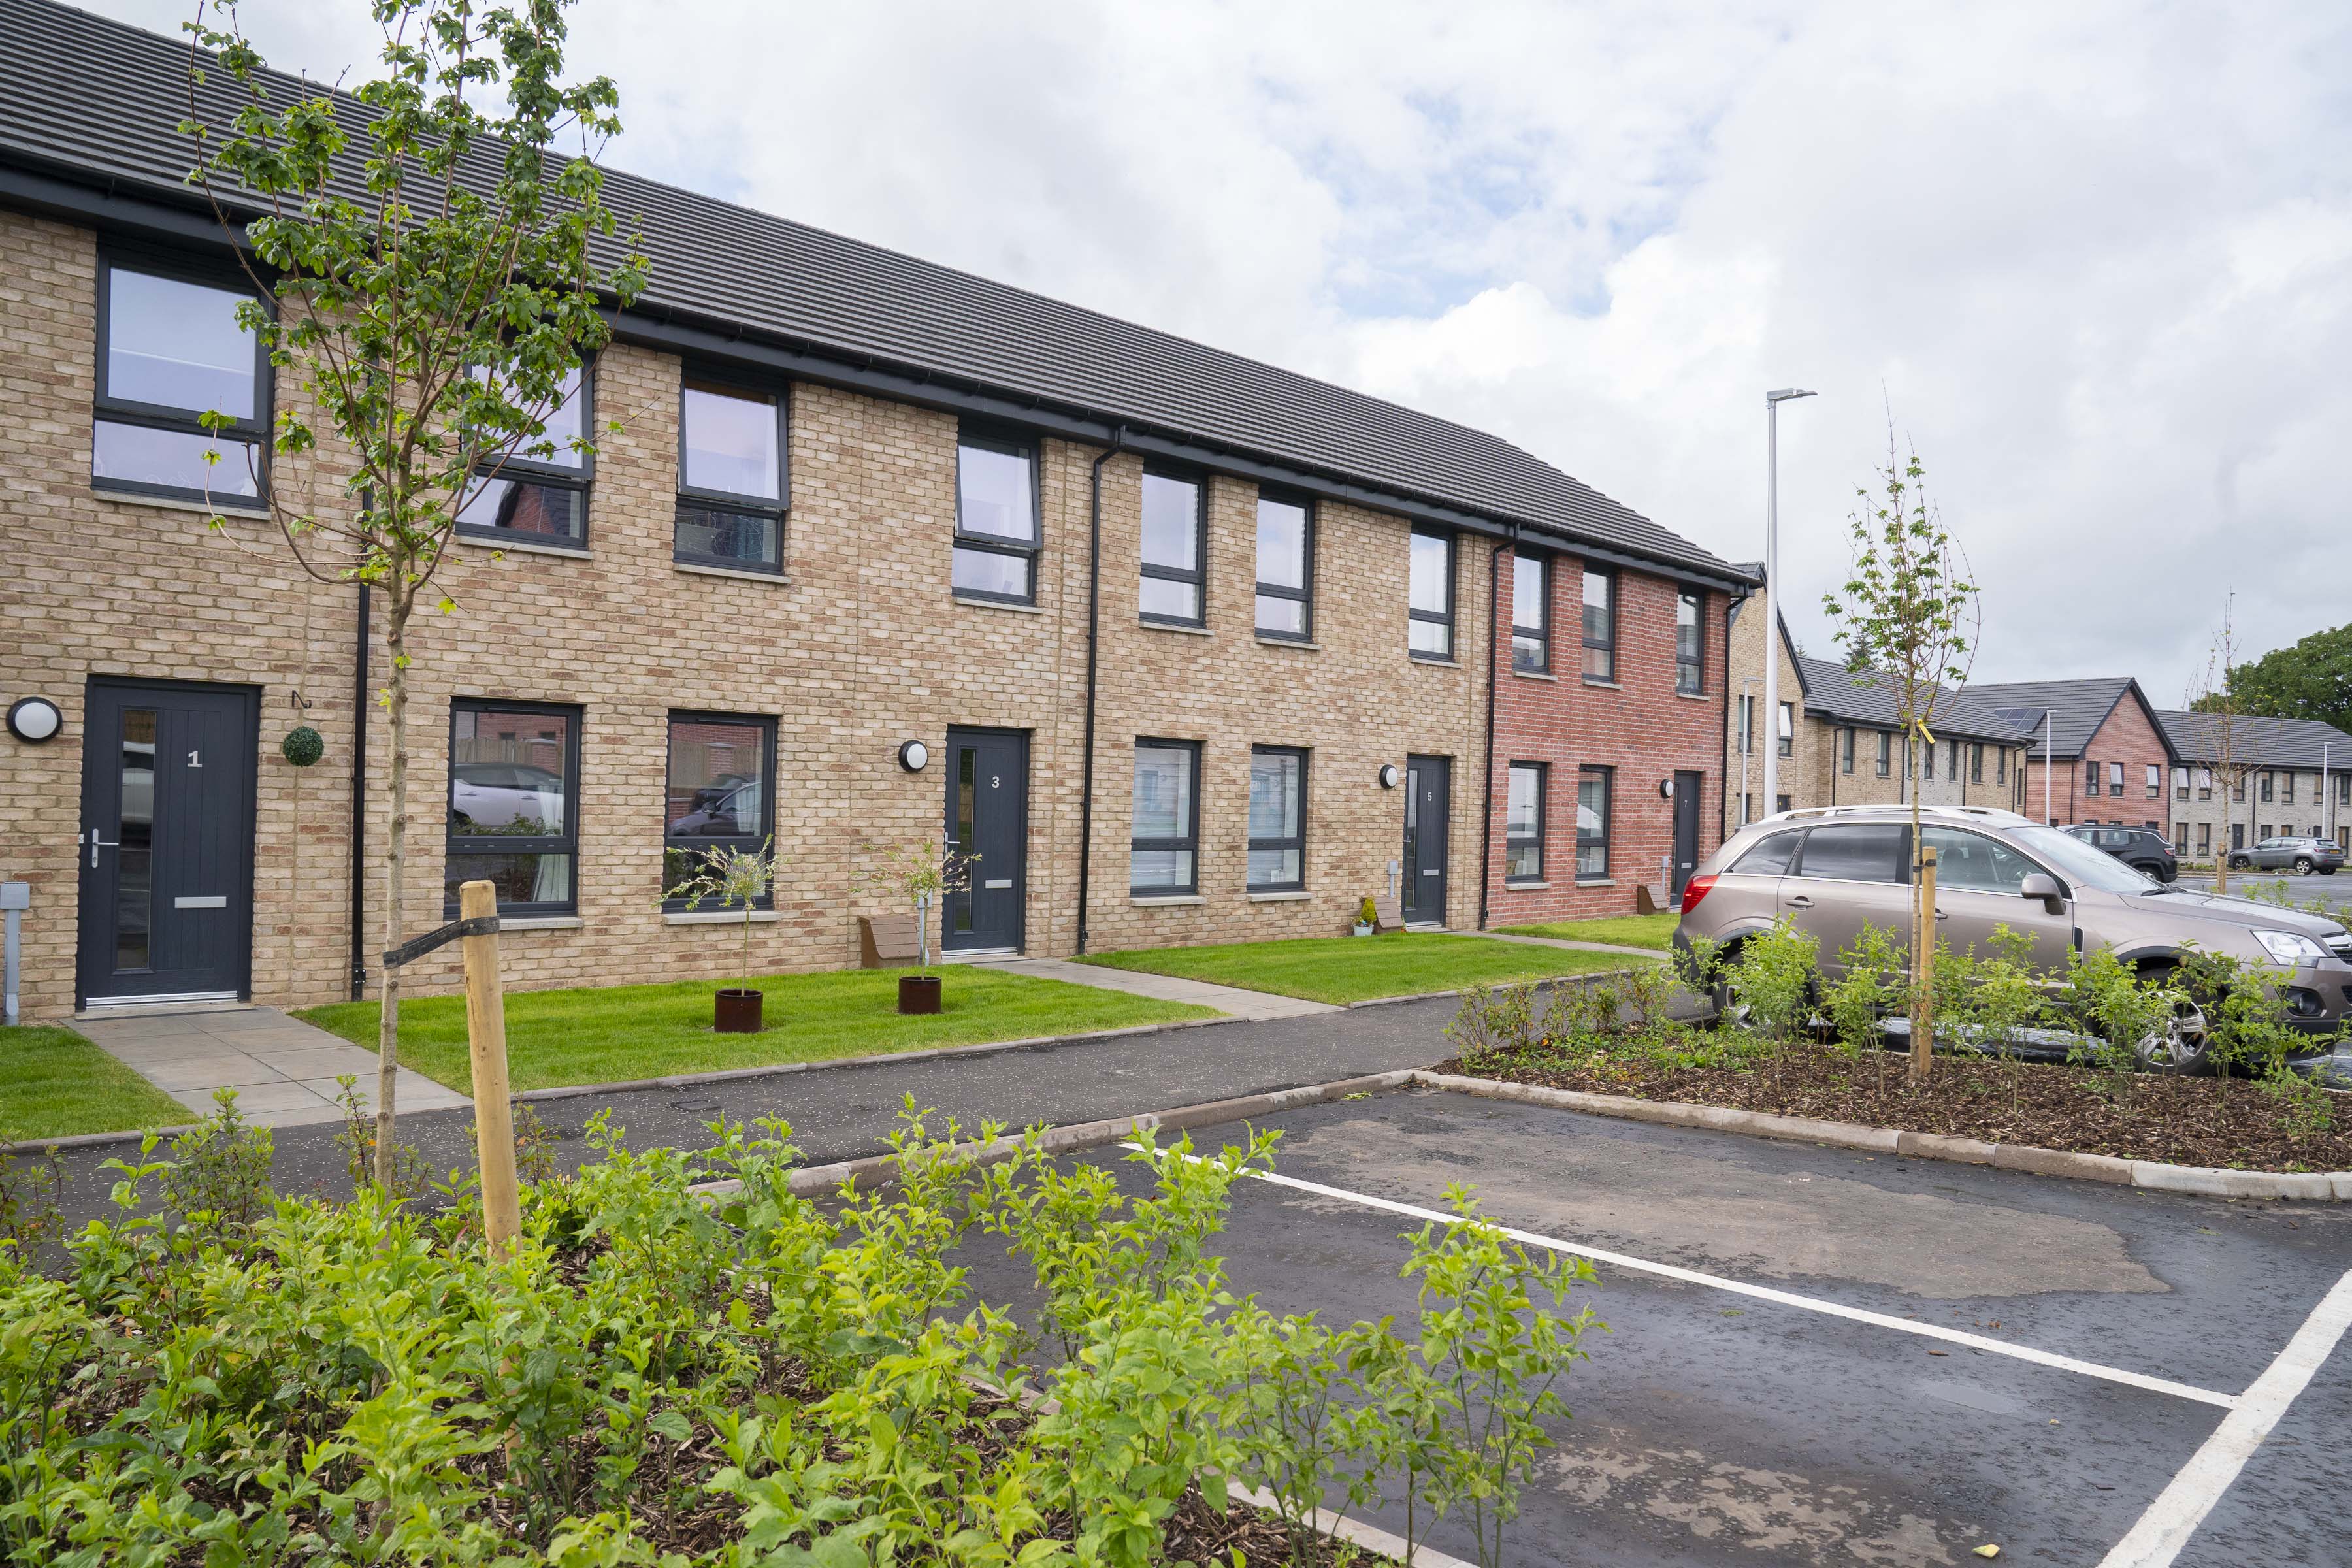 East Renfrewshire Council opens biggest development of council homes